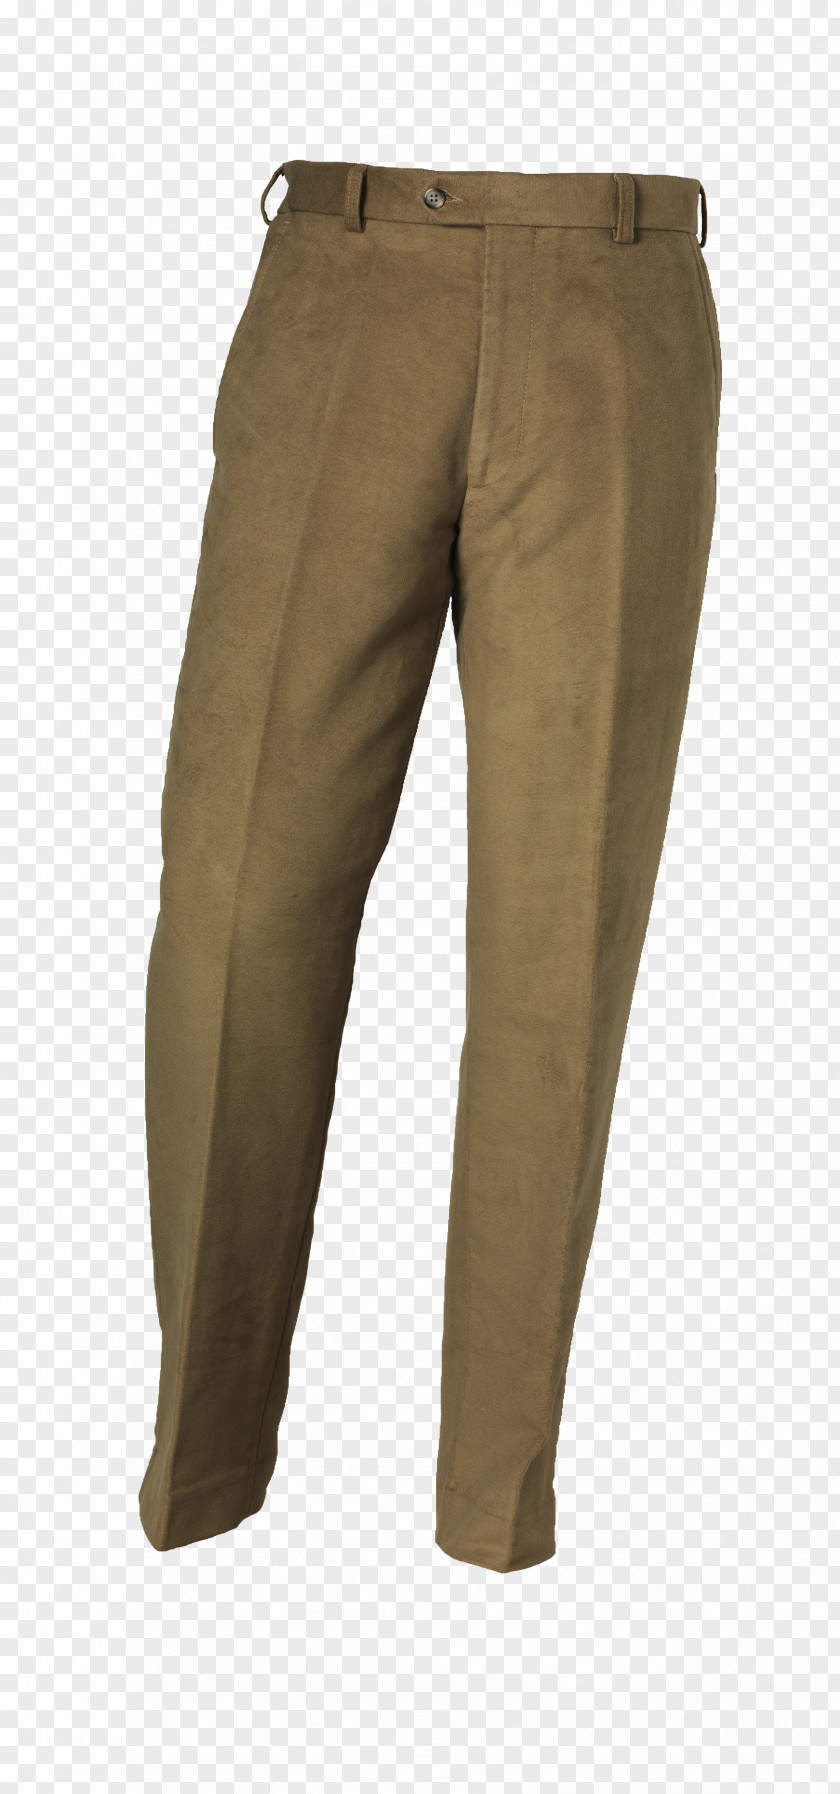 Military Moleskin Pants Textile Long Underwear PNG